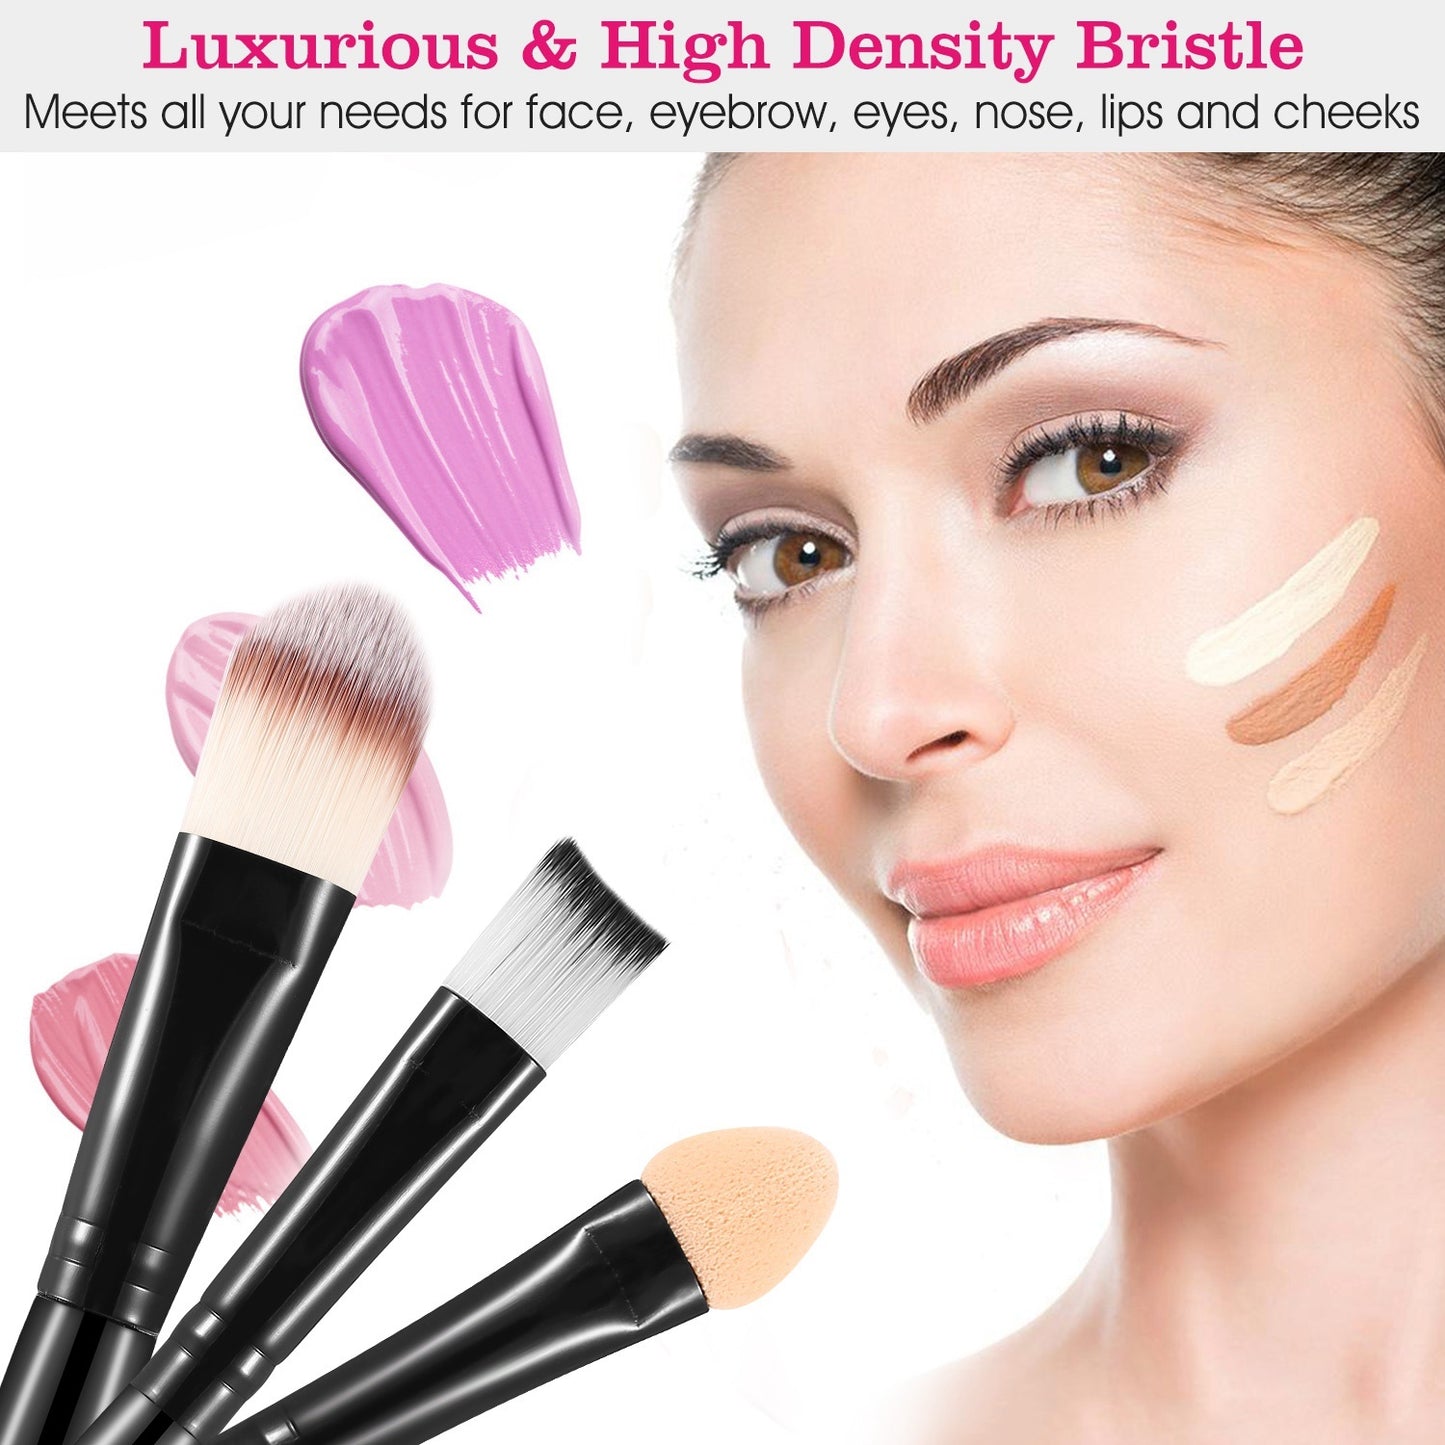 20 pcs Makeup Brushes Set Eye Shadows Face Foundation Brushes Cruelty-Free Synthetic Fiber Bristles